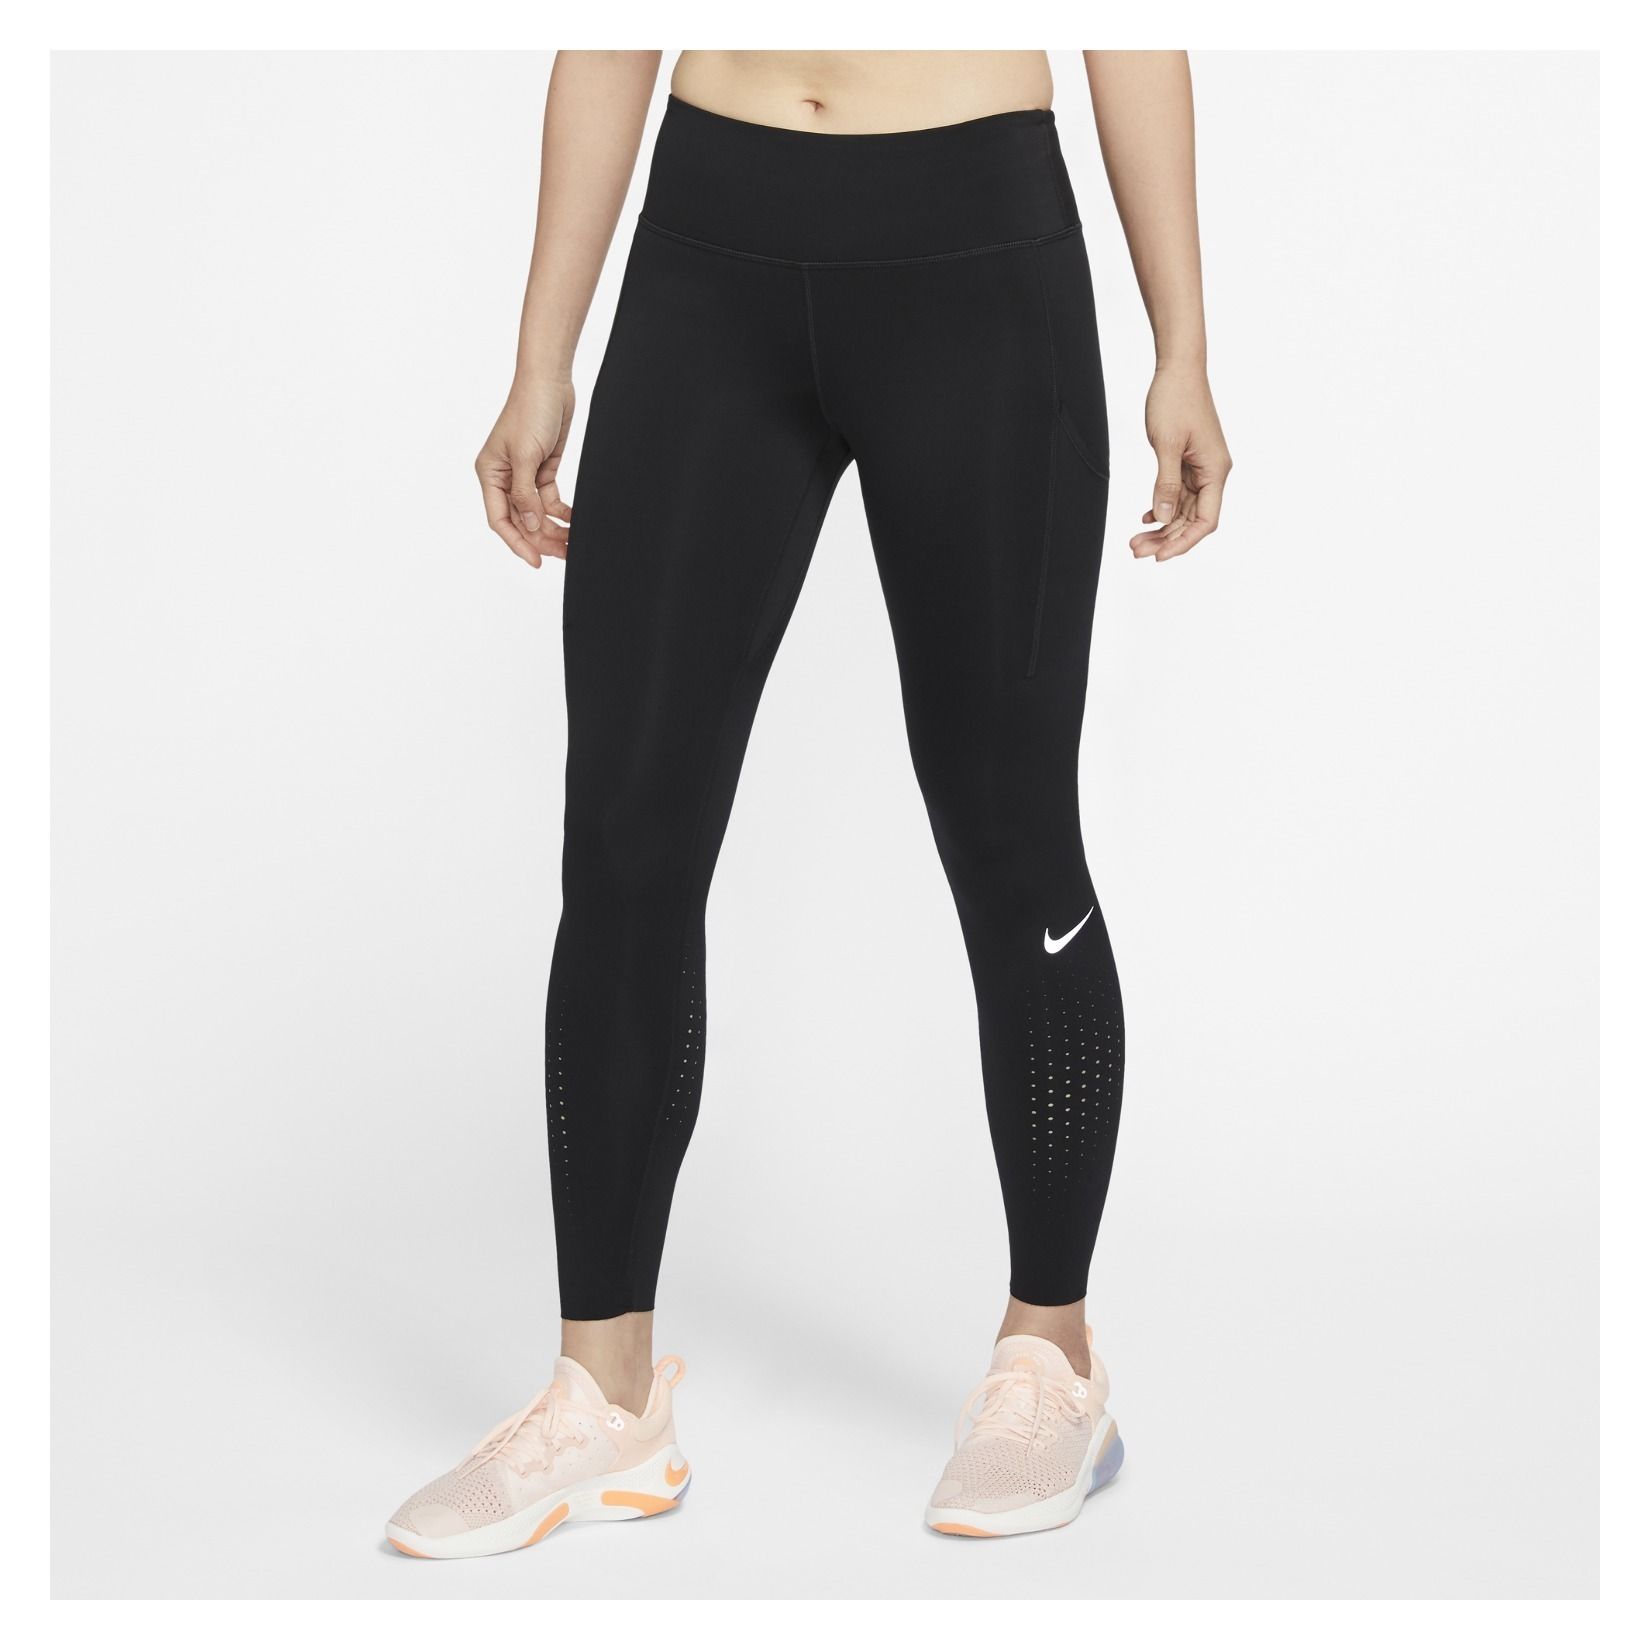 Nike Womens Epic Lux Running Tights - Kitlocker.com